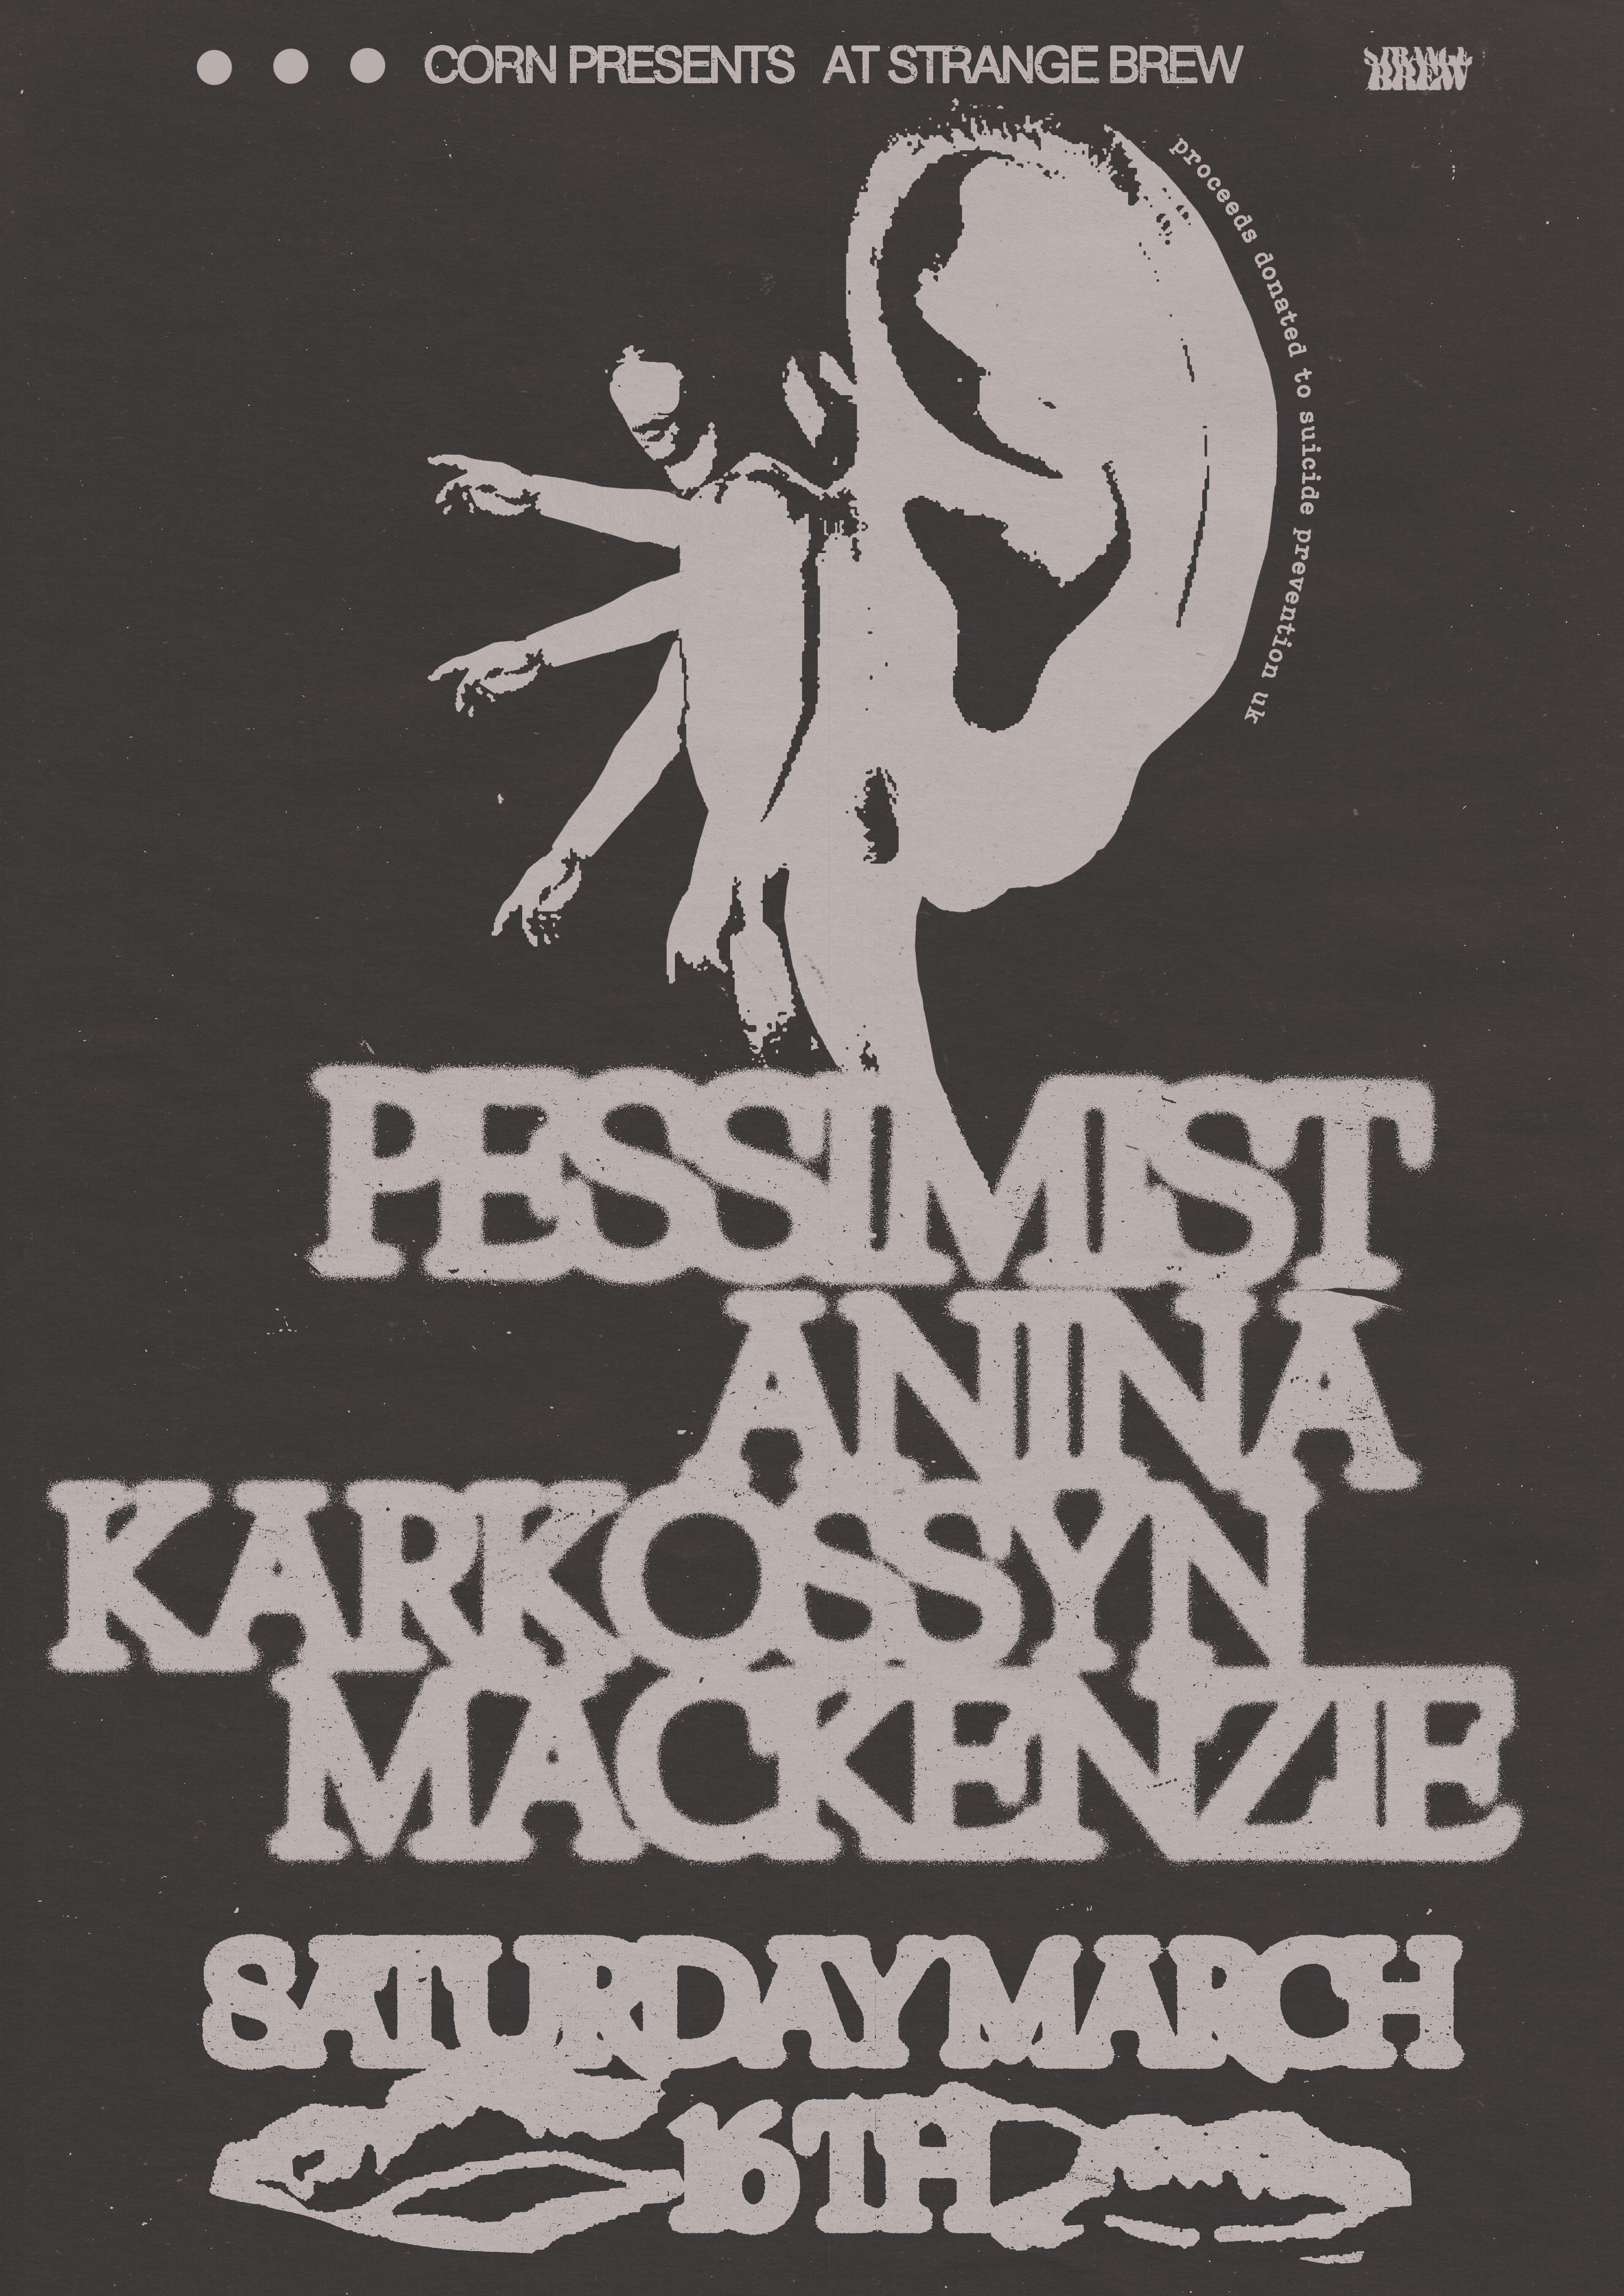 Pessimist, Anina, Karkossyn, Mackenzie - フライヤー表